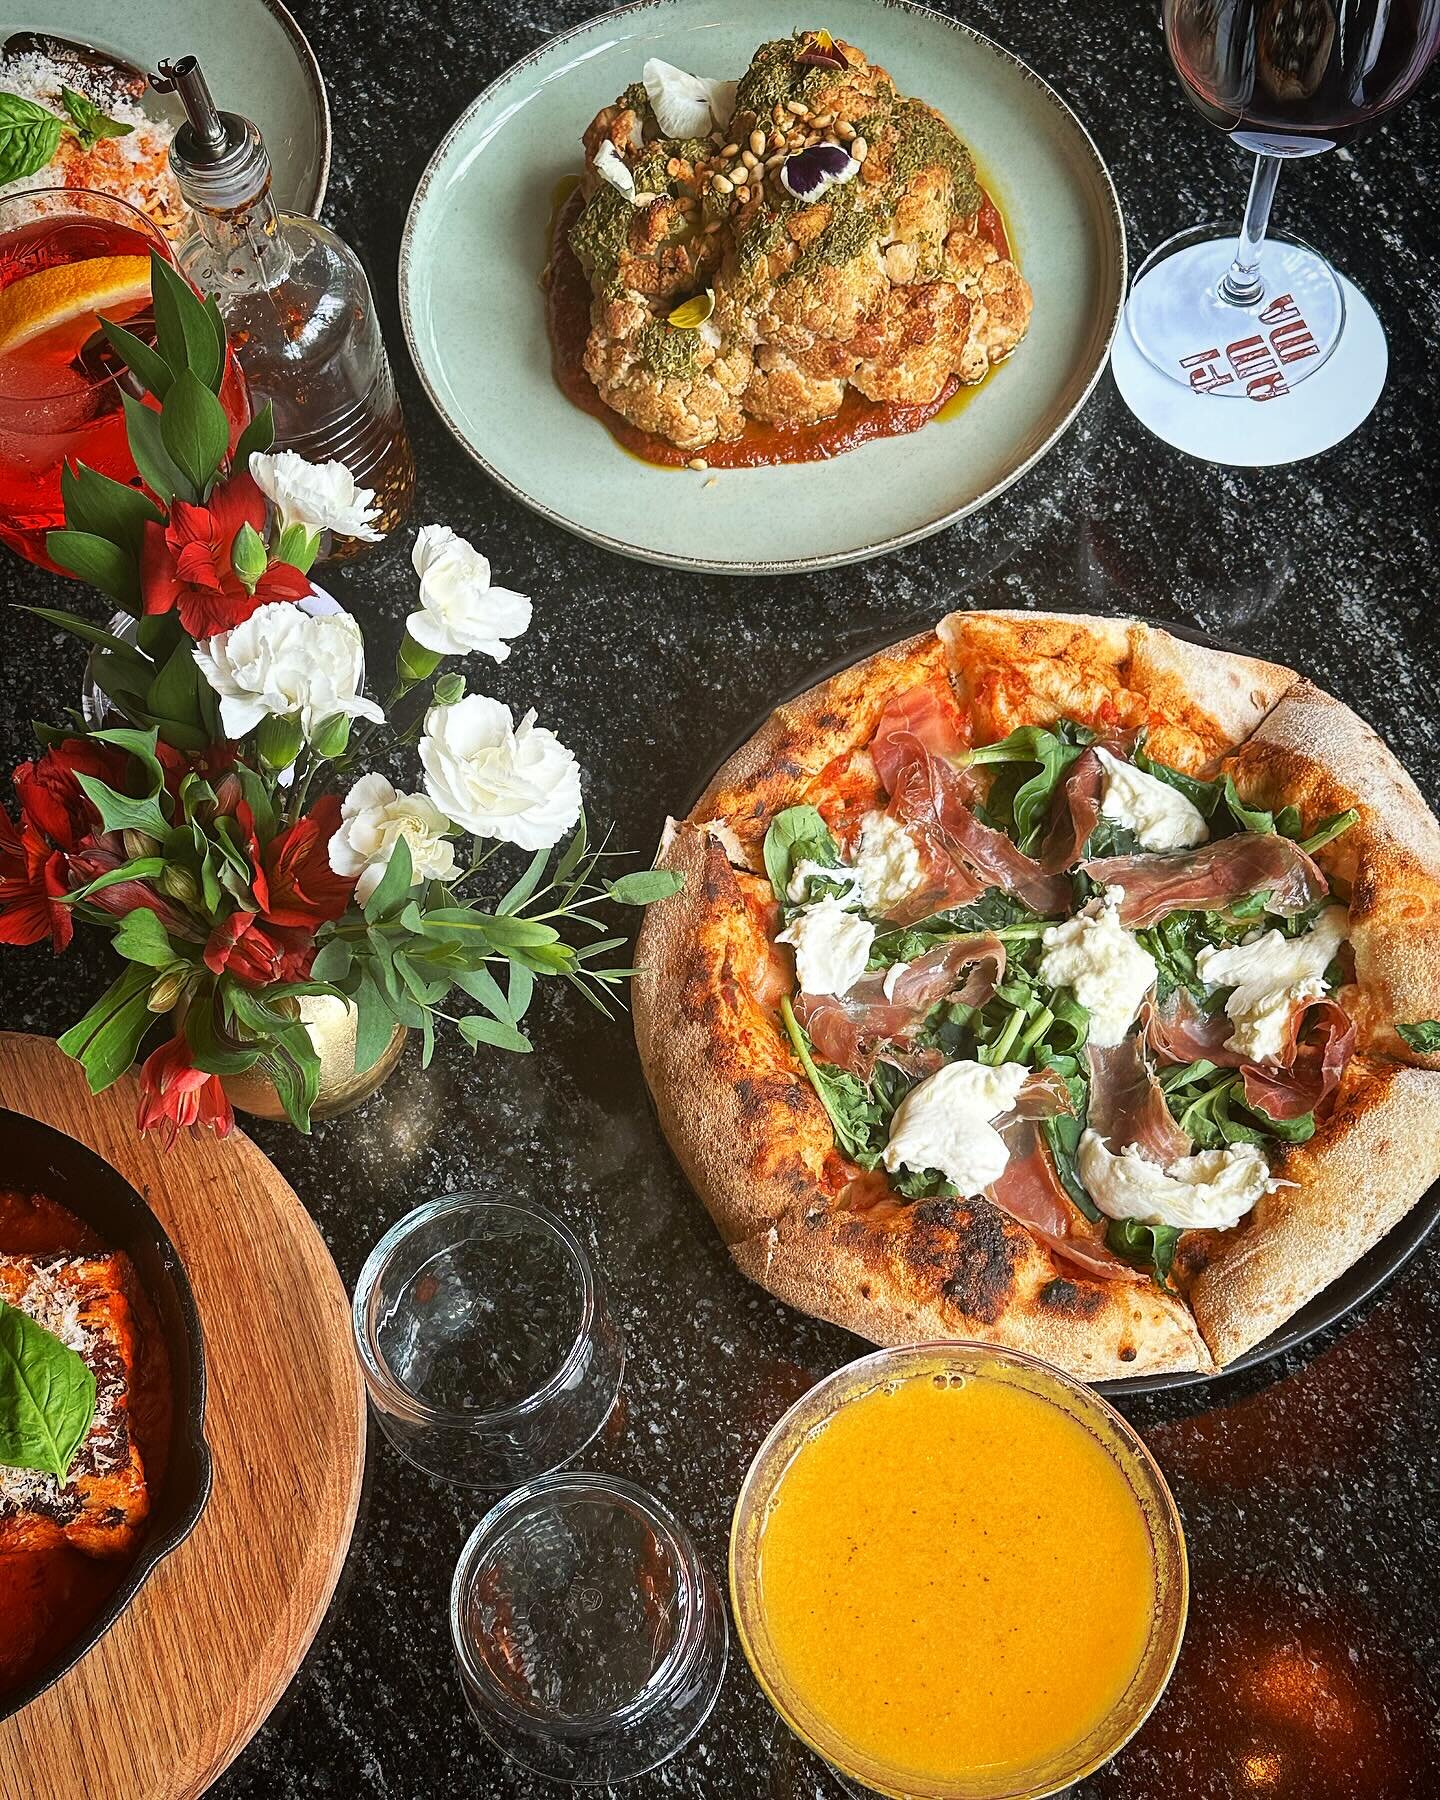 Ven a compartir con los tuyos 🔥 🎄#restauranteitaliano #restaurantecdmx #sanjeronimo